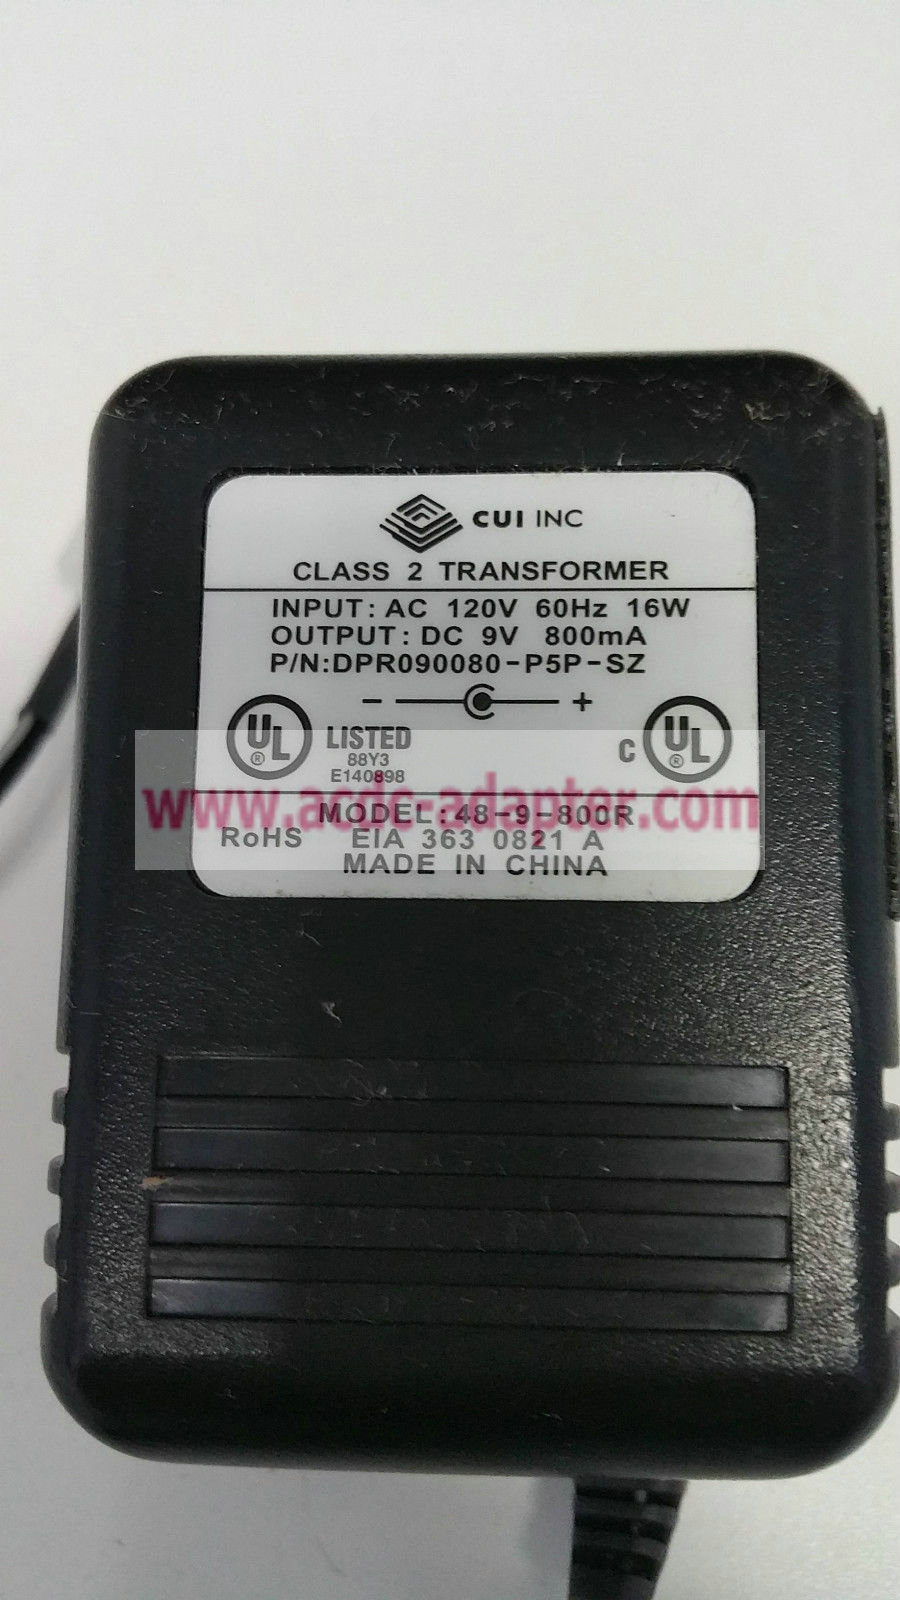 New CUI DPR090080-P5P-SZ 48-9-800R Power Adapter 9VDC 800mA AC ADAPTER